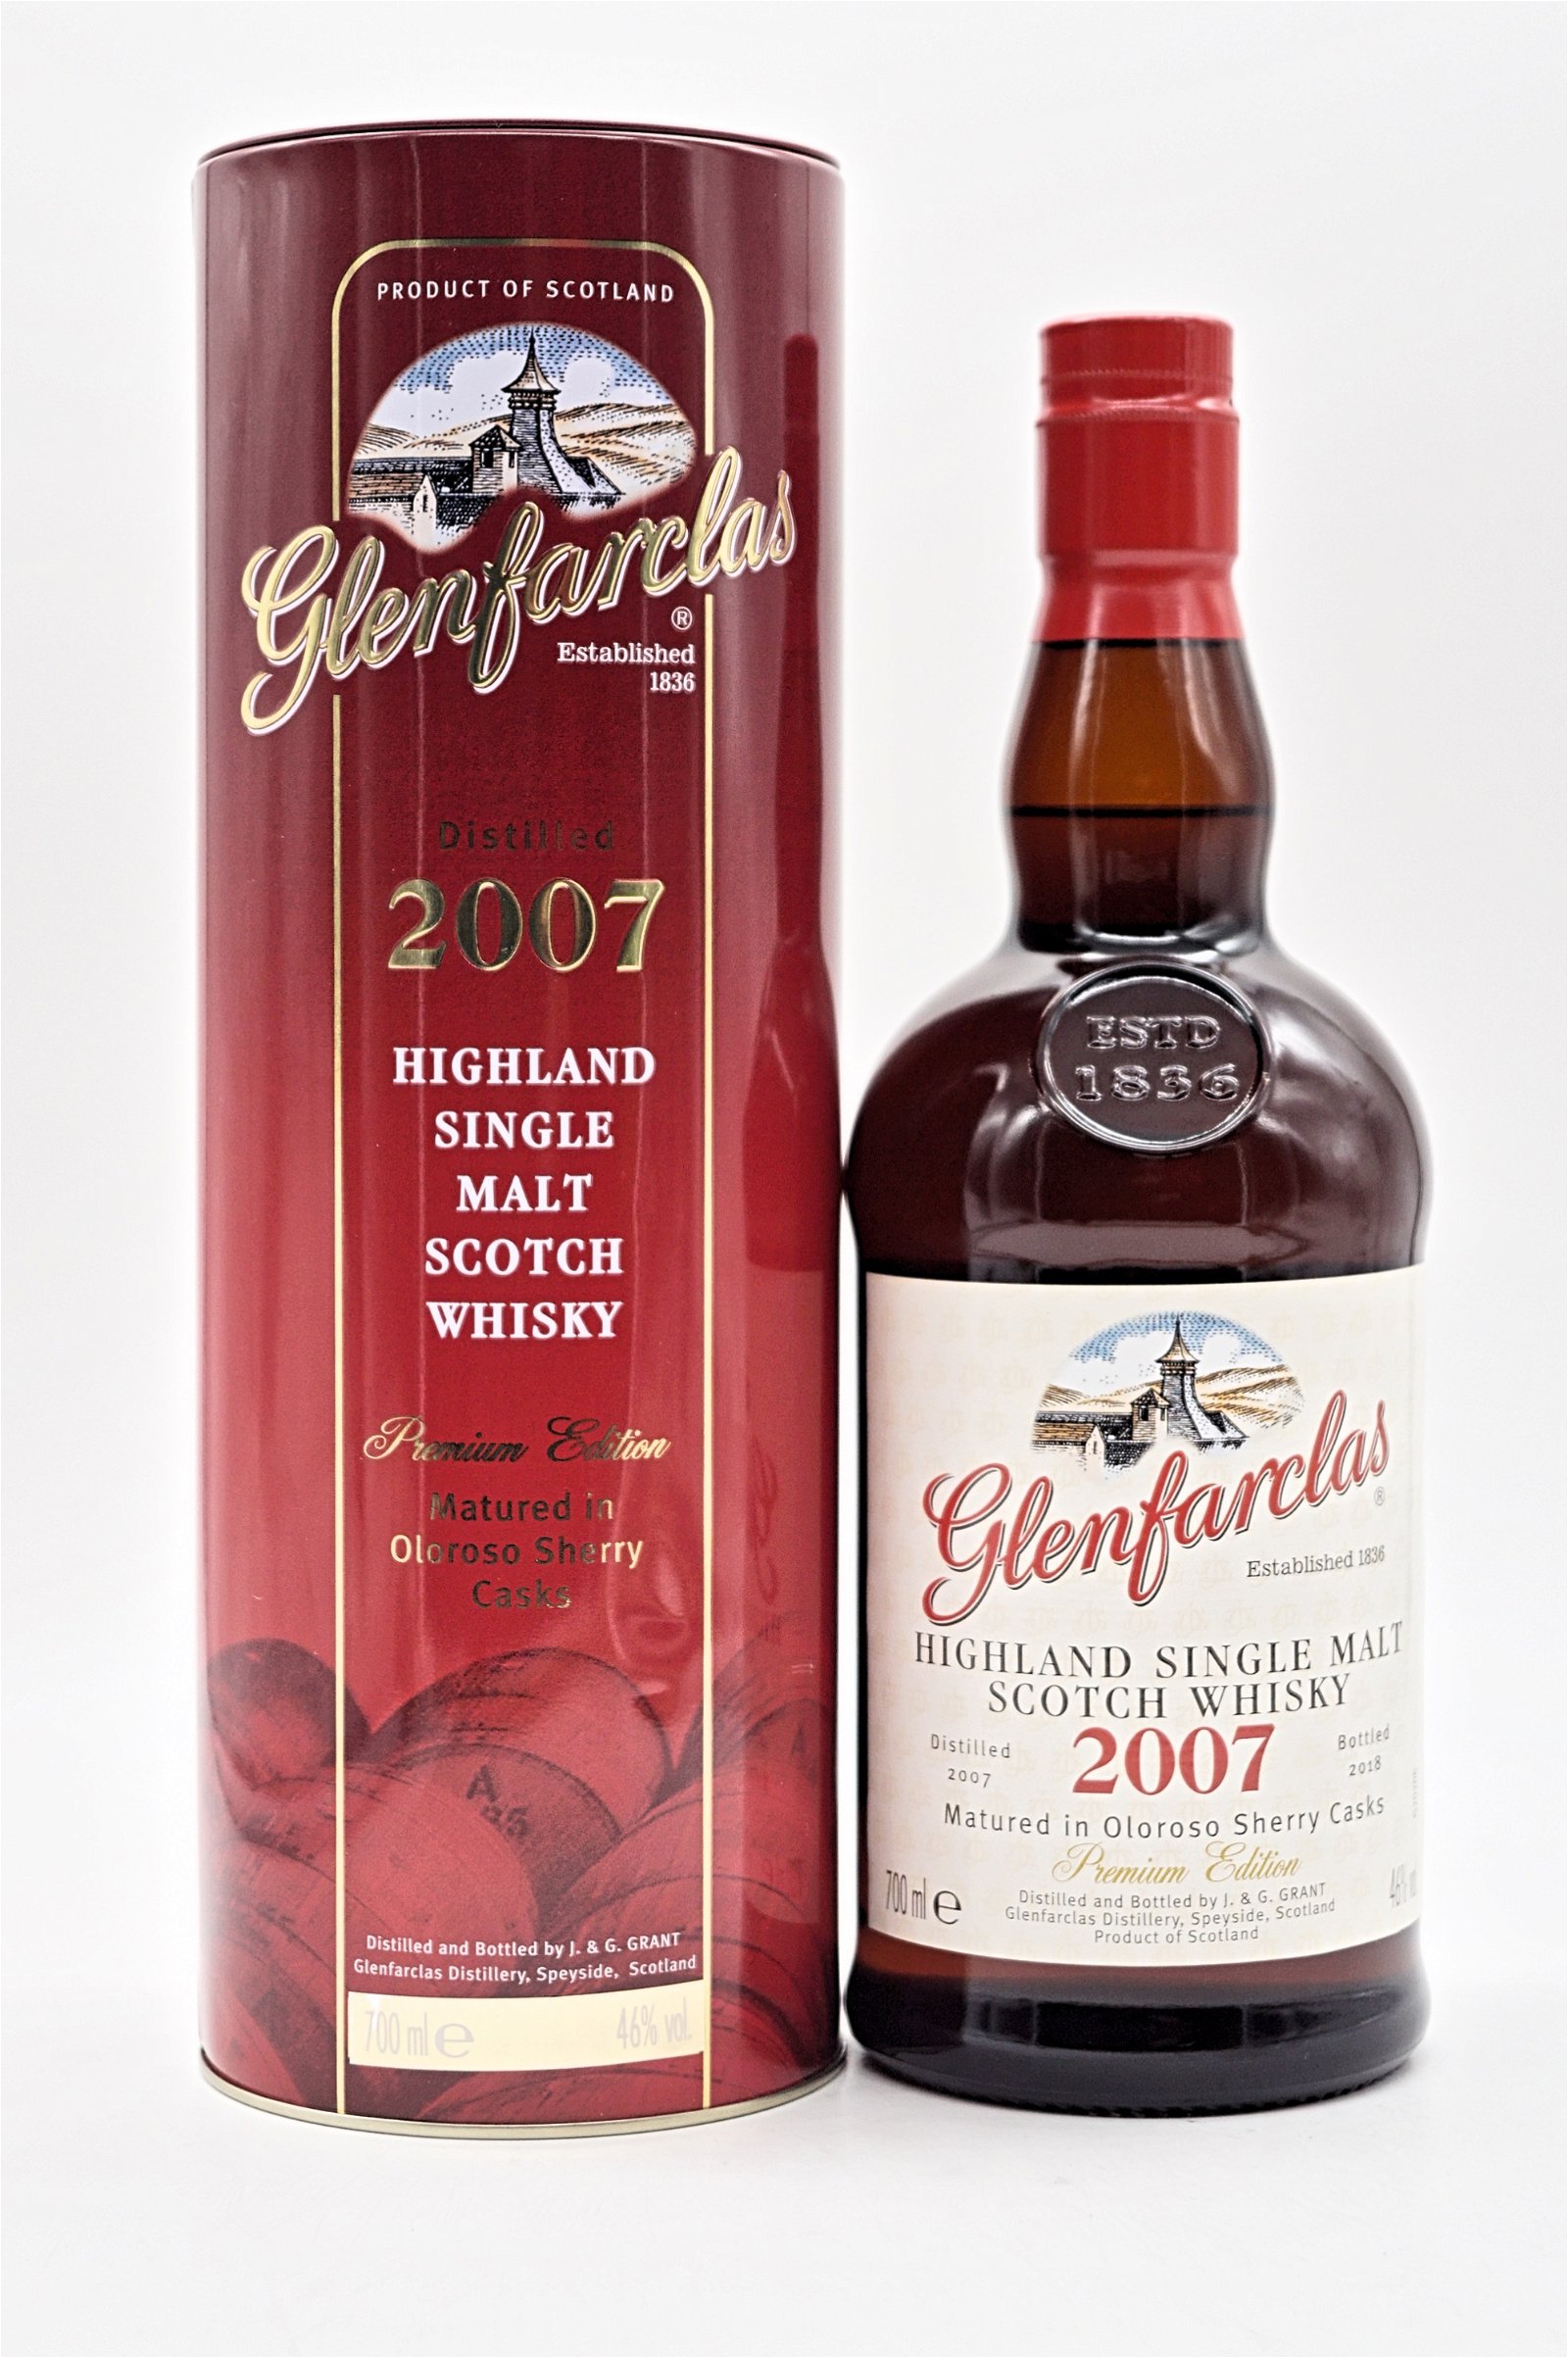 Glenfarclas 2007/2018 Premium Edition Highland Single Malt Scotch Whisky 